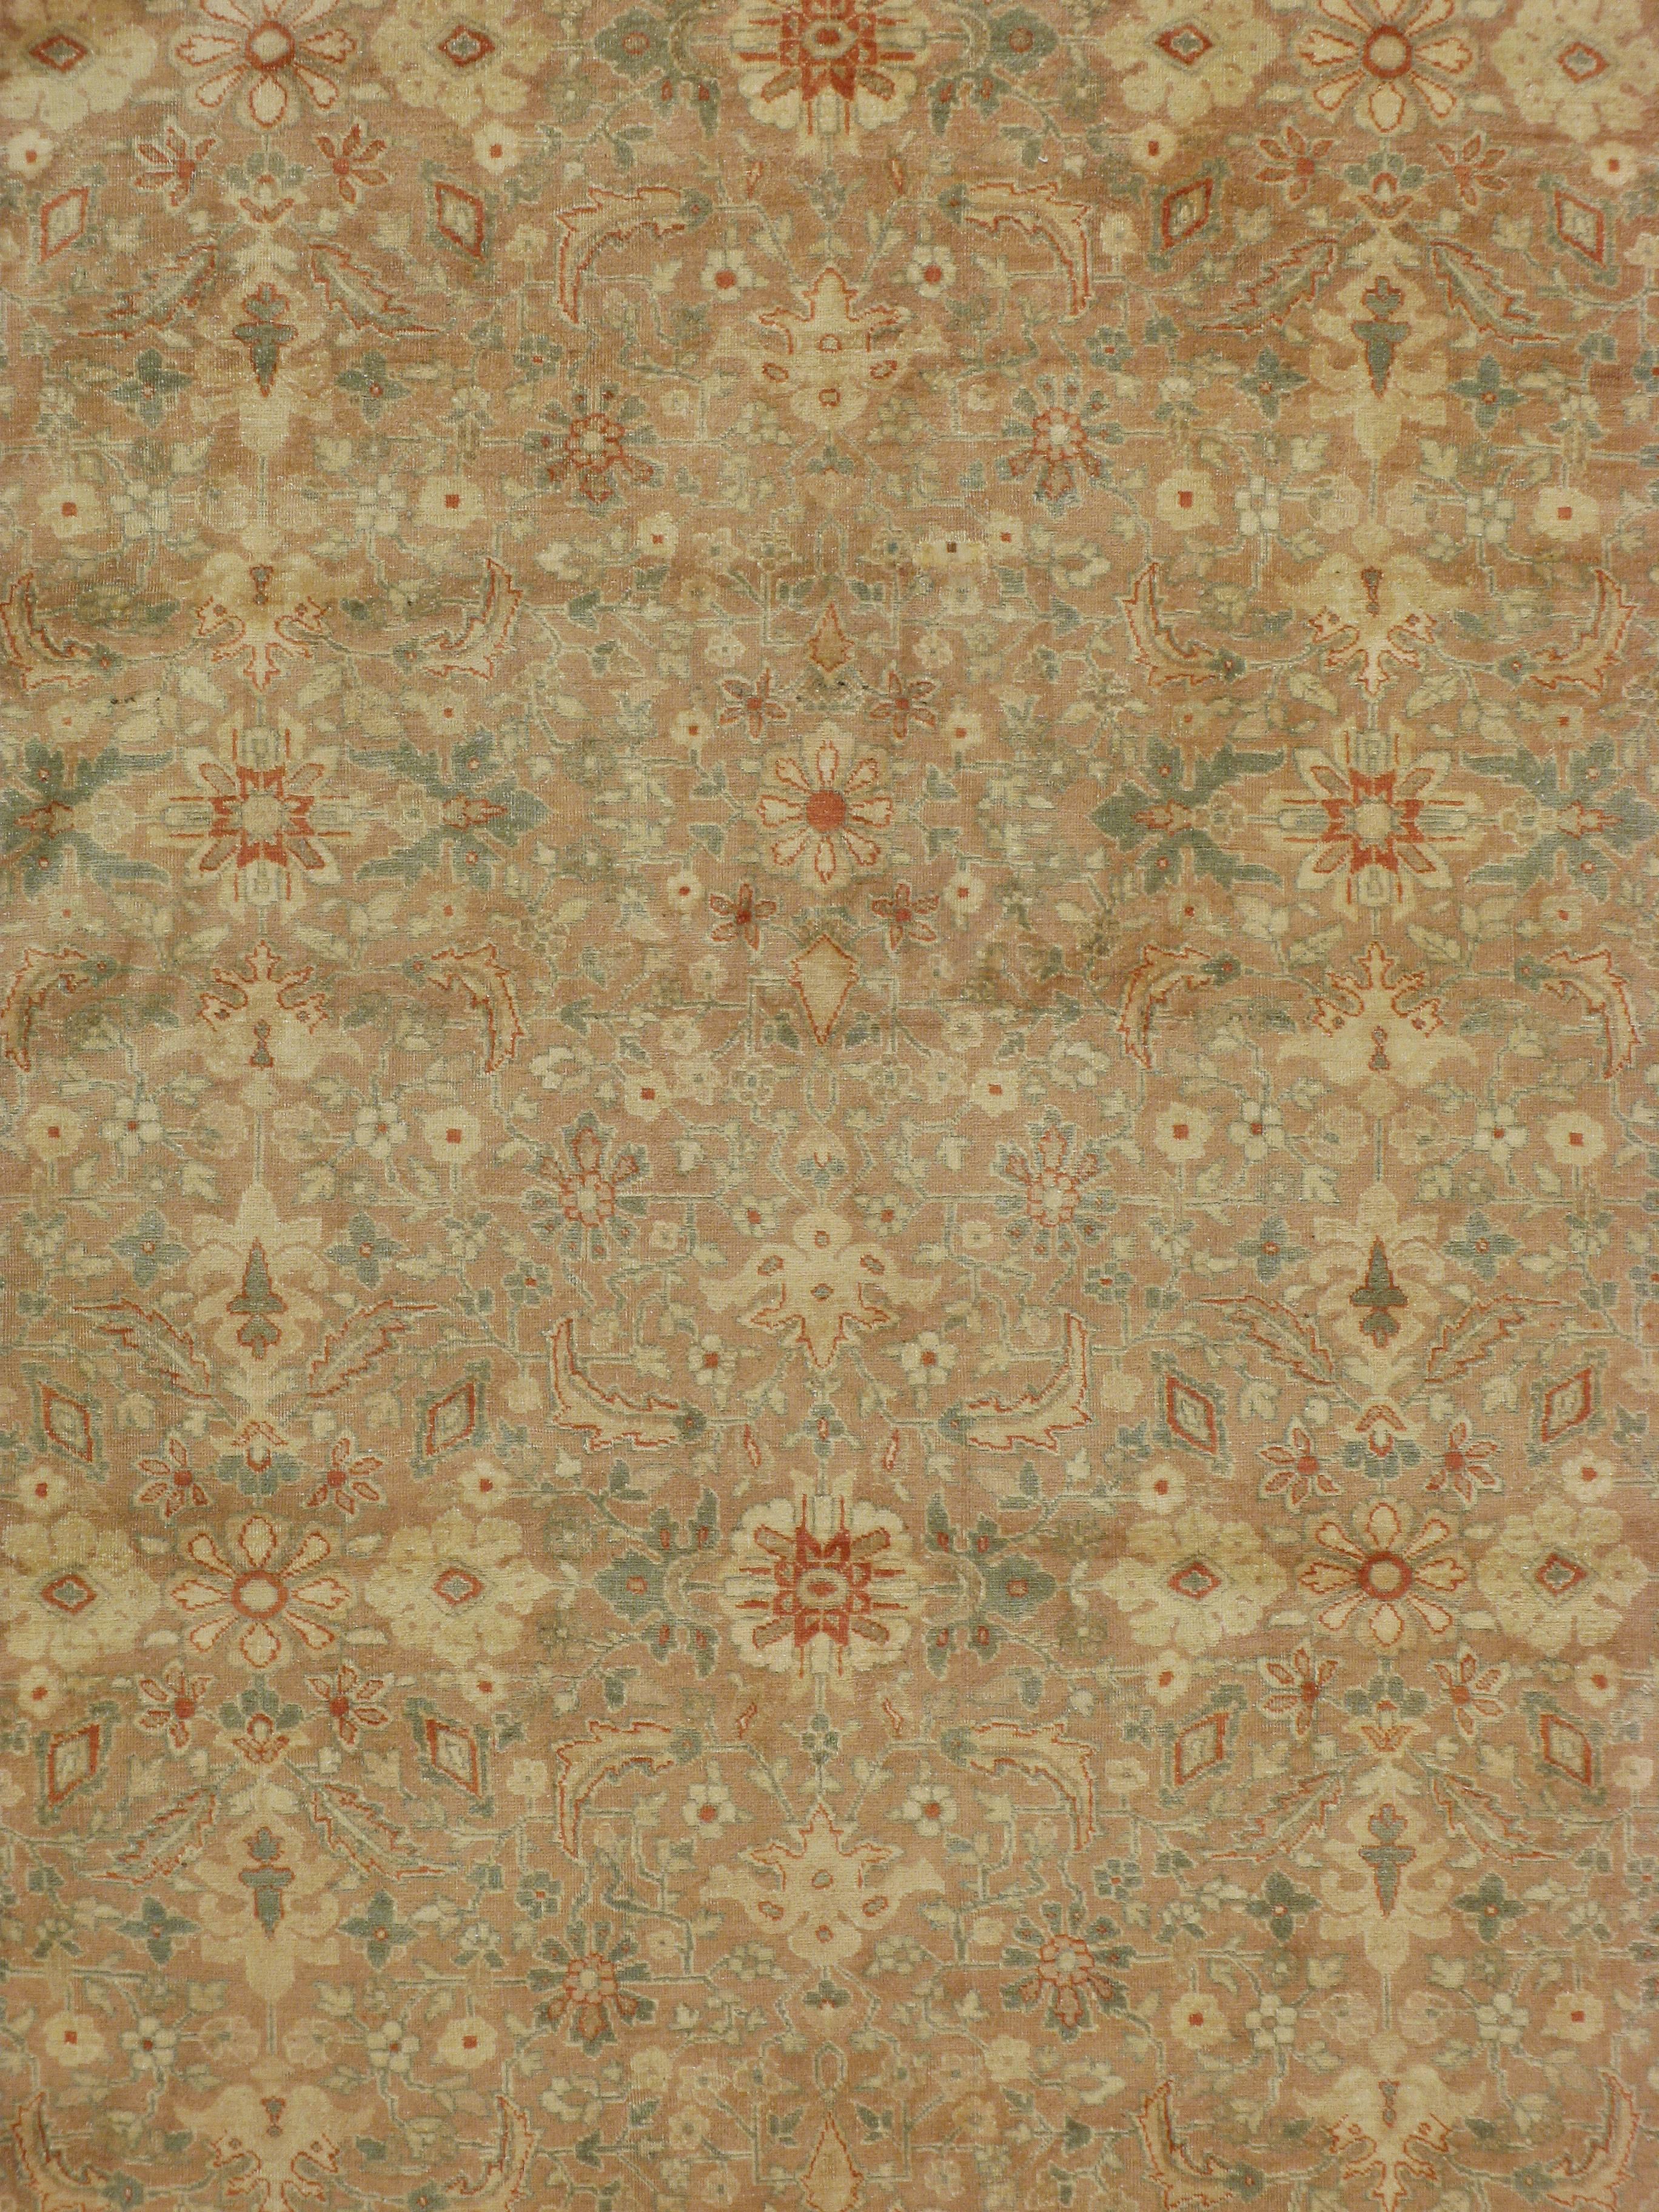 An early 20th century Persian Tabriz carpet.